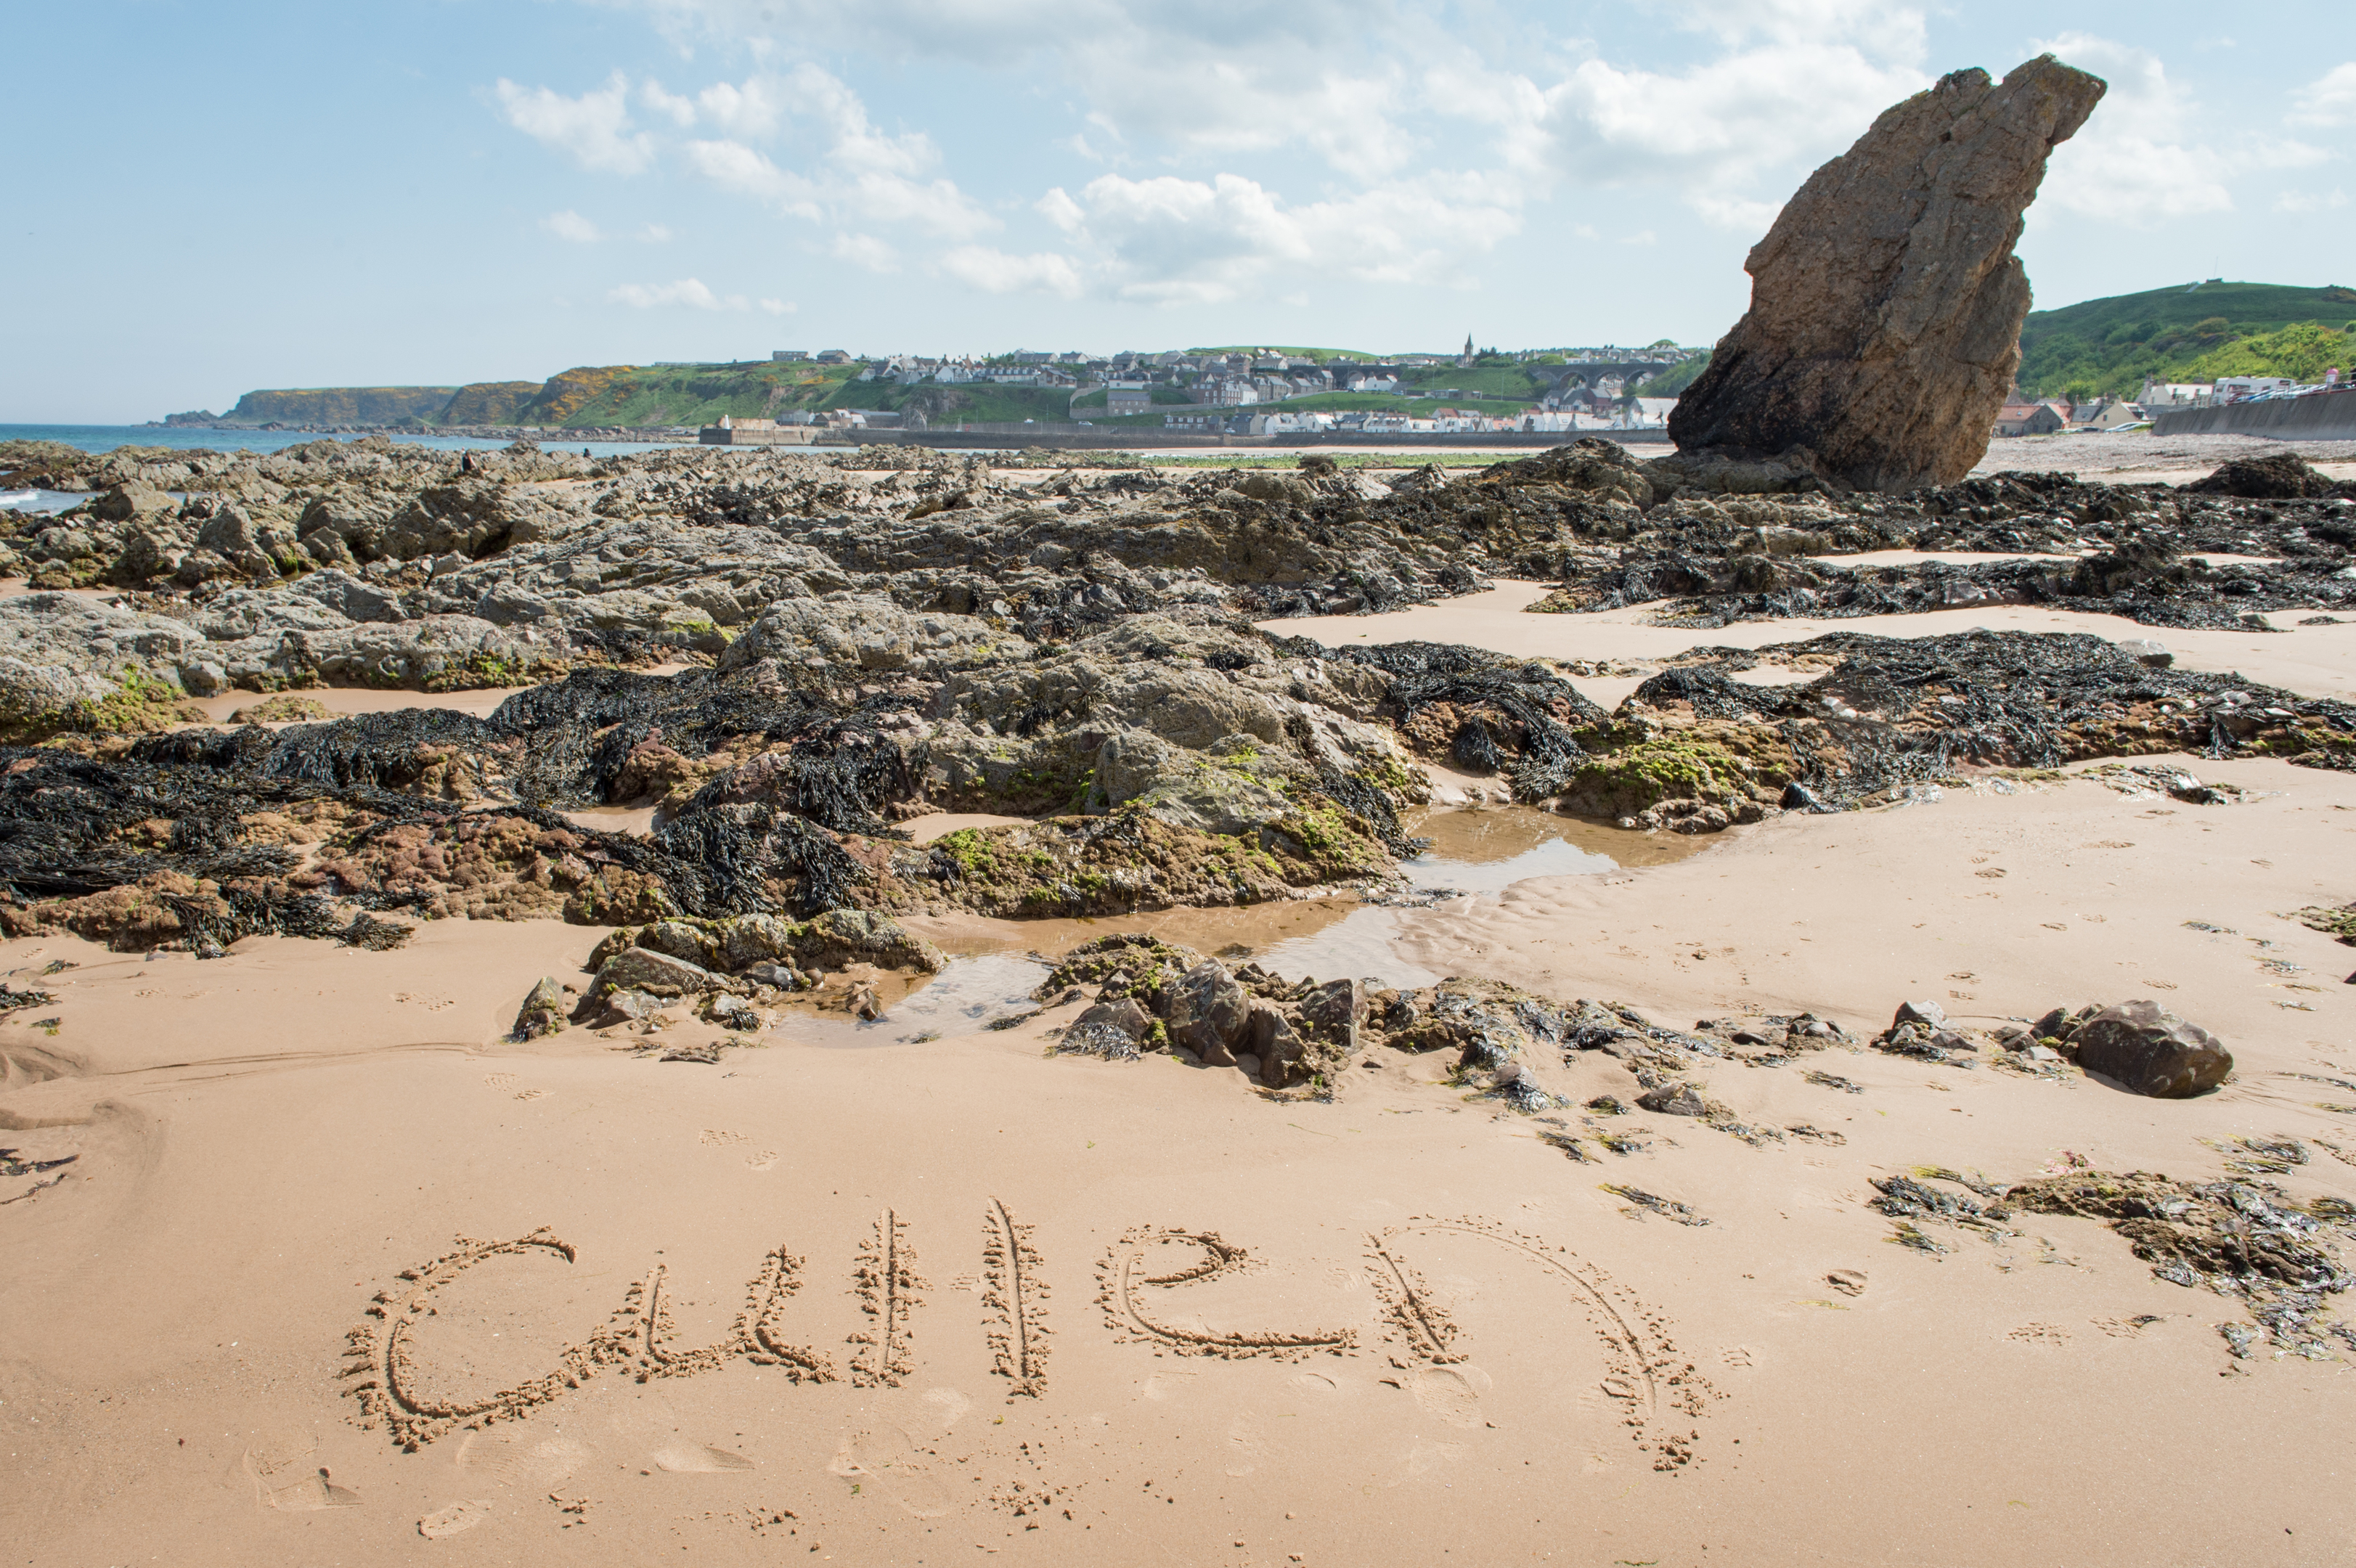 Cullen has been named as Scotland's best beach holiday destination.